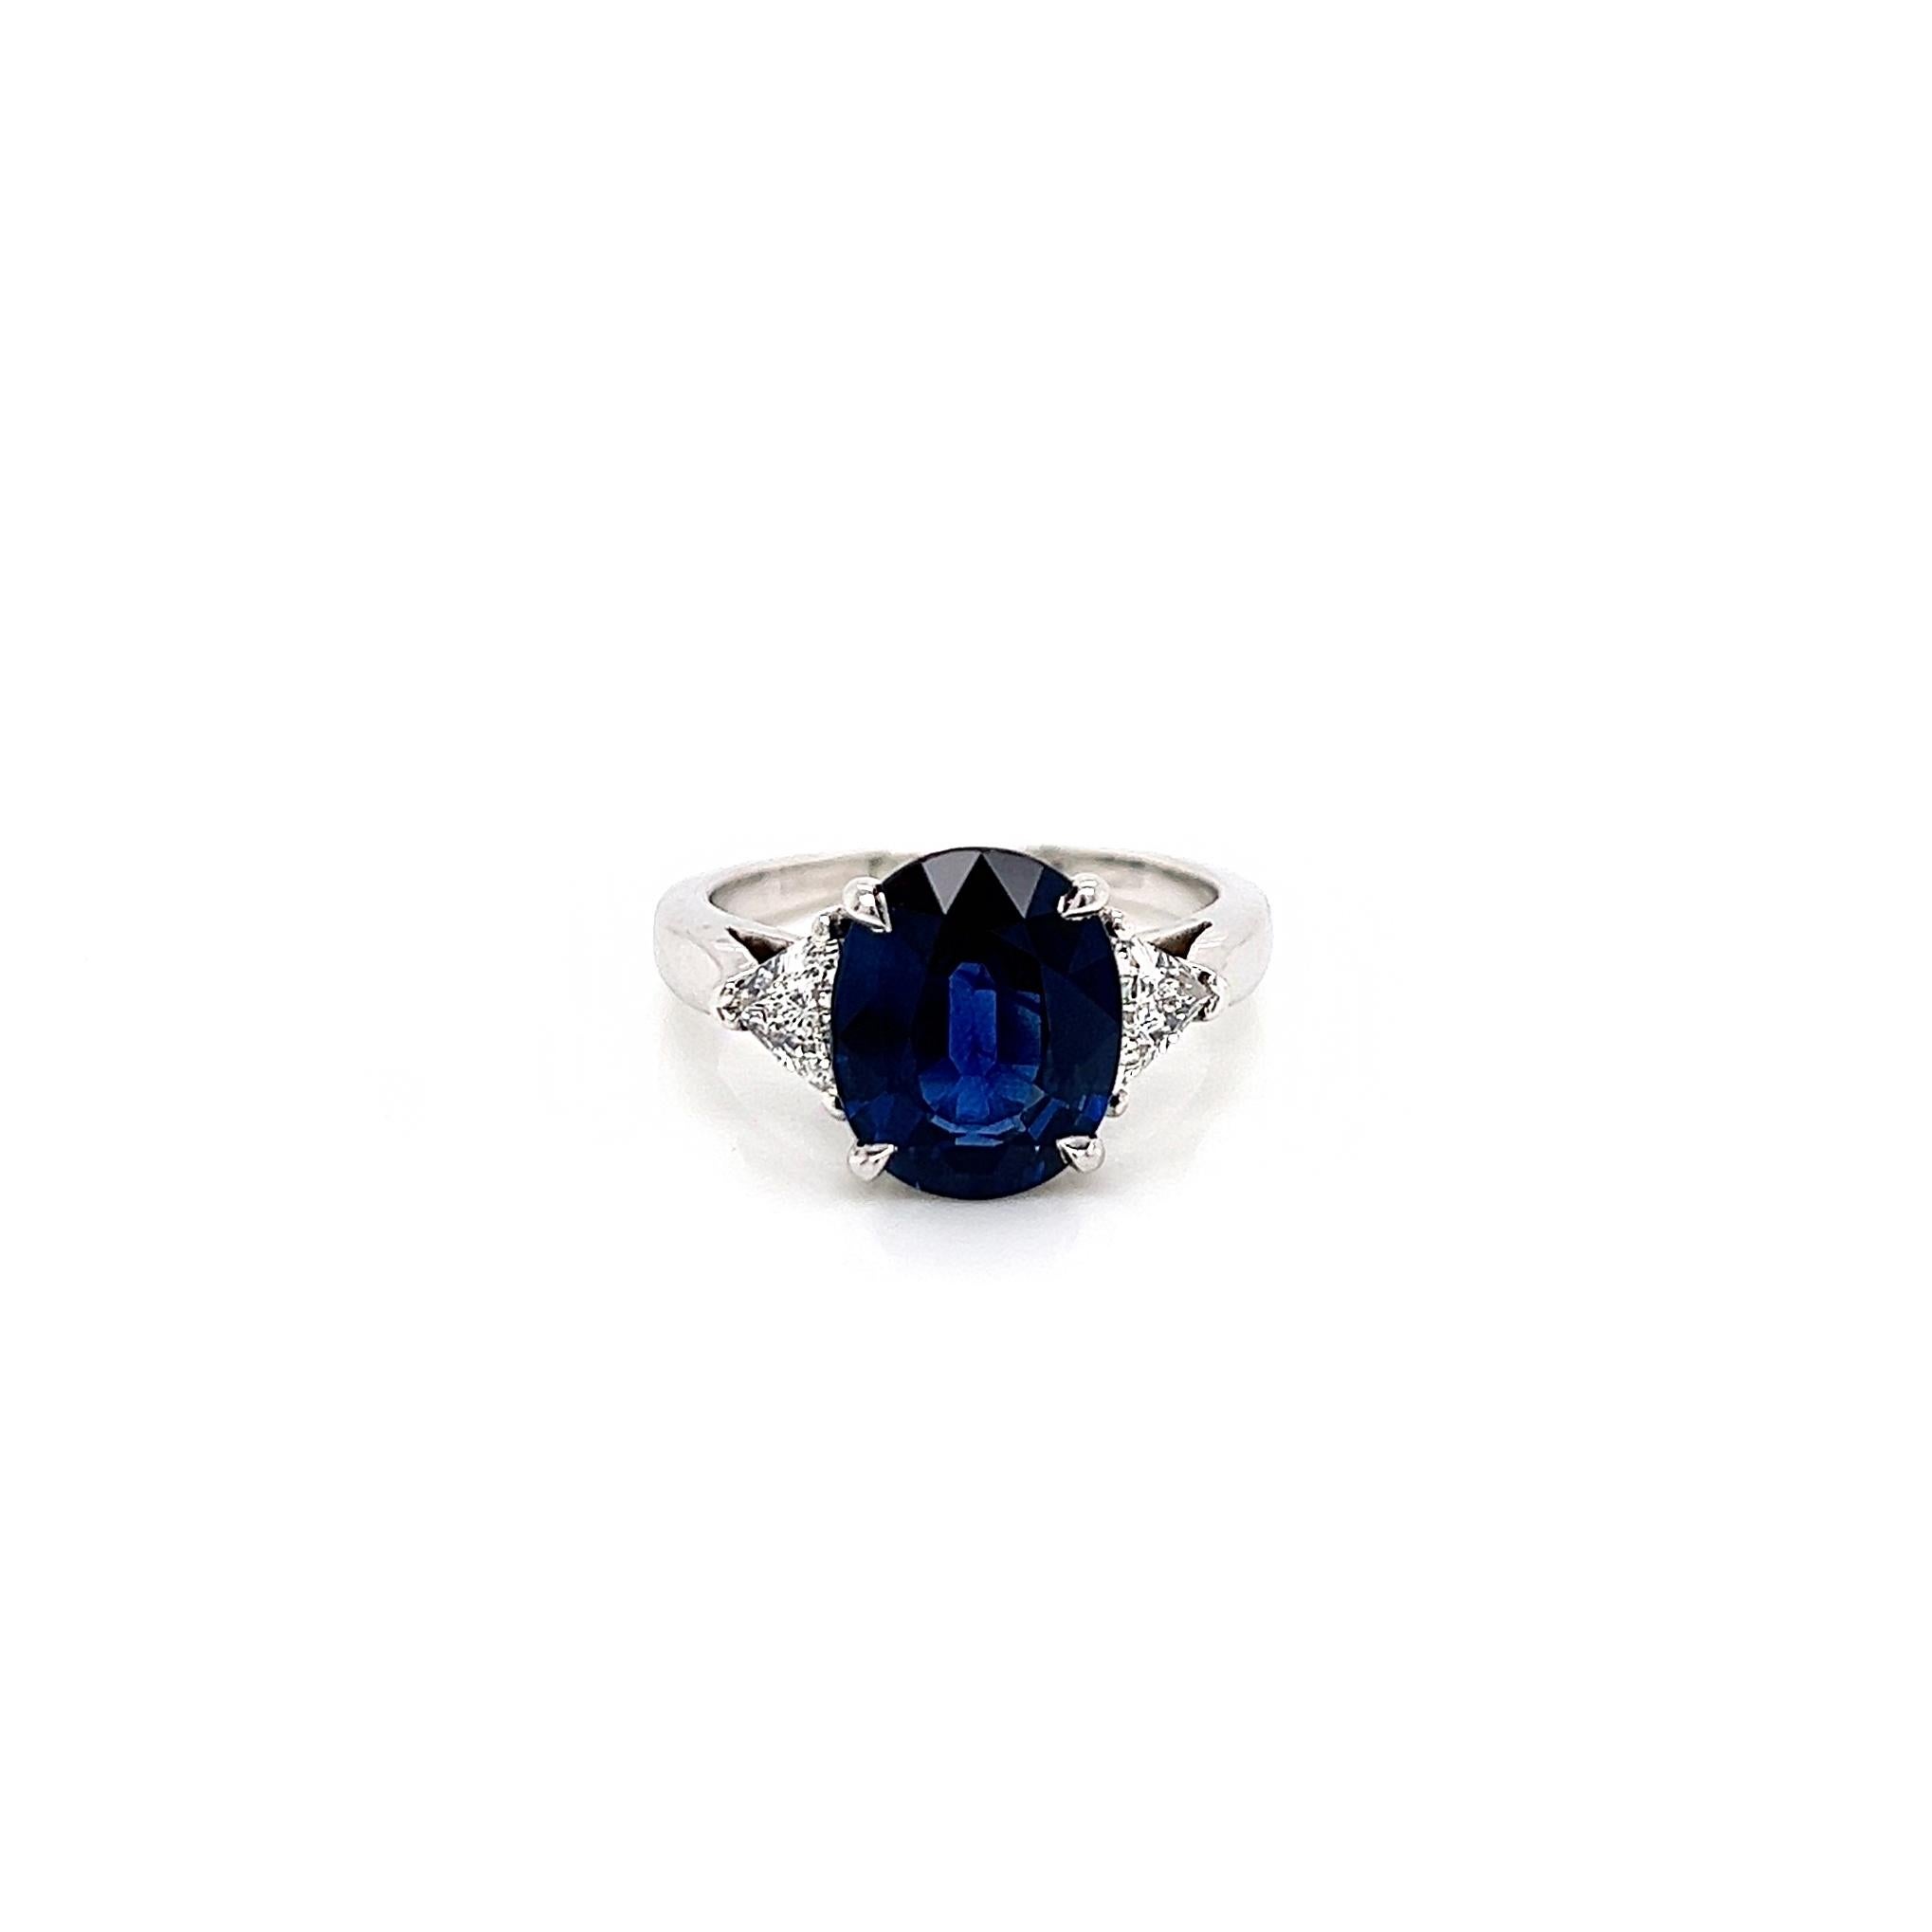 4.75 Total Carat Sapphire and Diamond Ladies Ring. GIA Certified.

-Metal Type: Platinum
-4.13 Carat Oval Cut Natural Blue Sapphire, GIA Certified 
-Sapphire Measurements: 11.19 x 9.04 x 4.79 mm
-0.61 Carat Brilliant Cut Natural side Diamonds. F-G